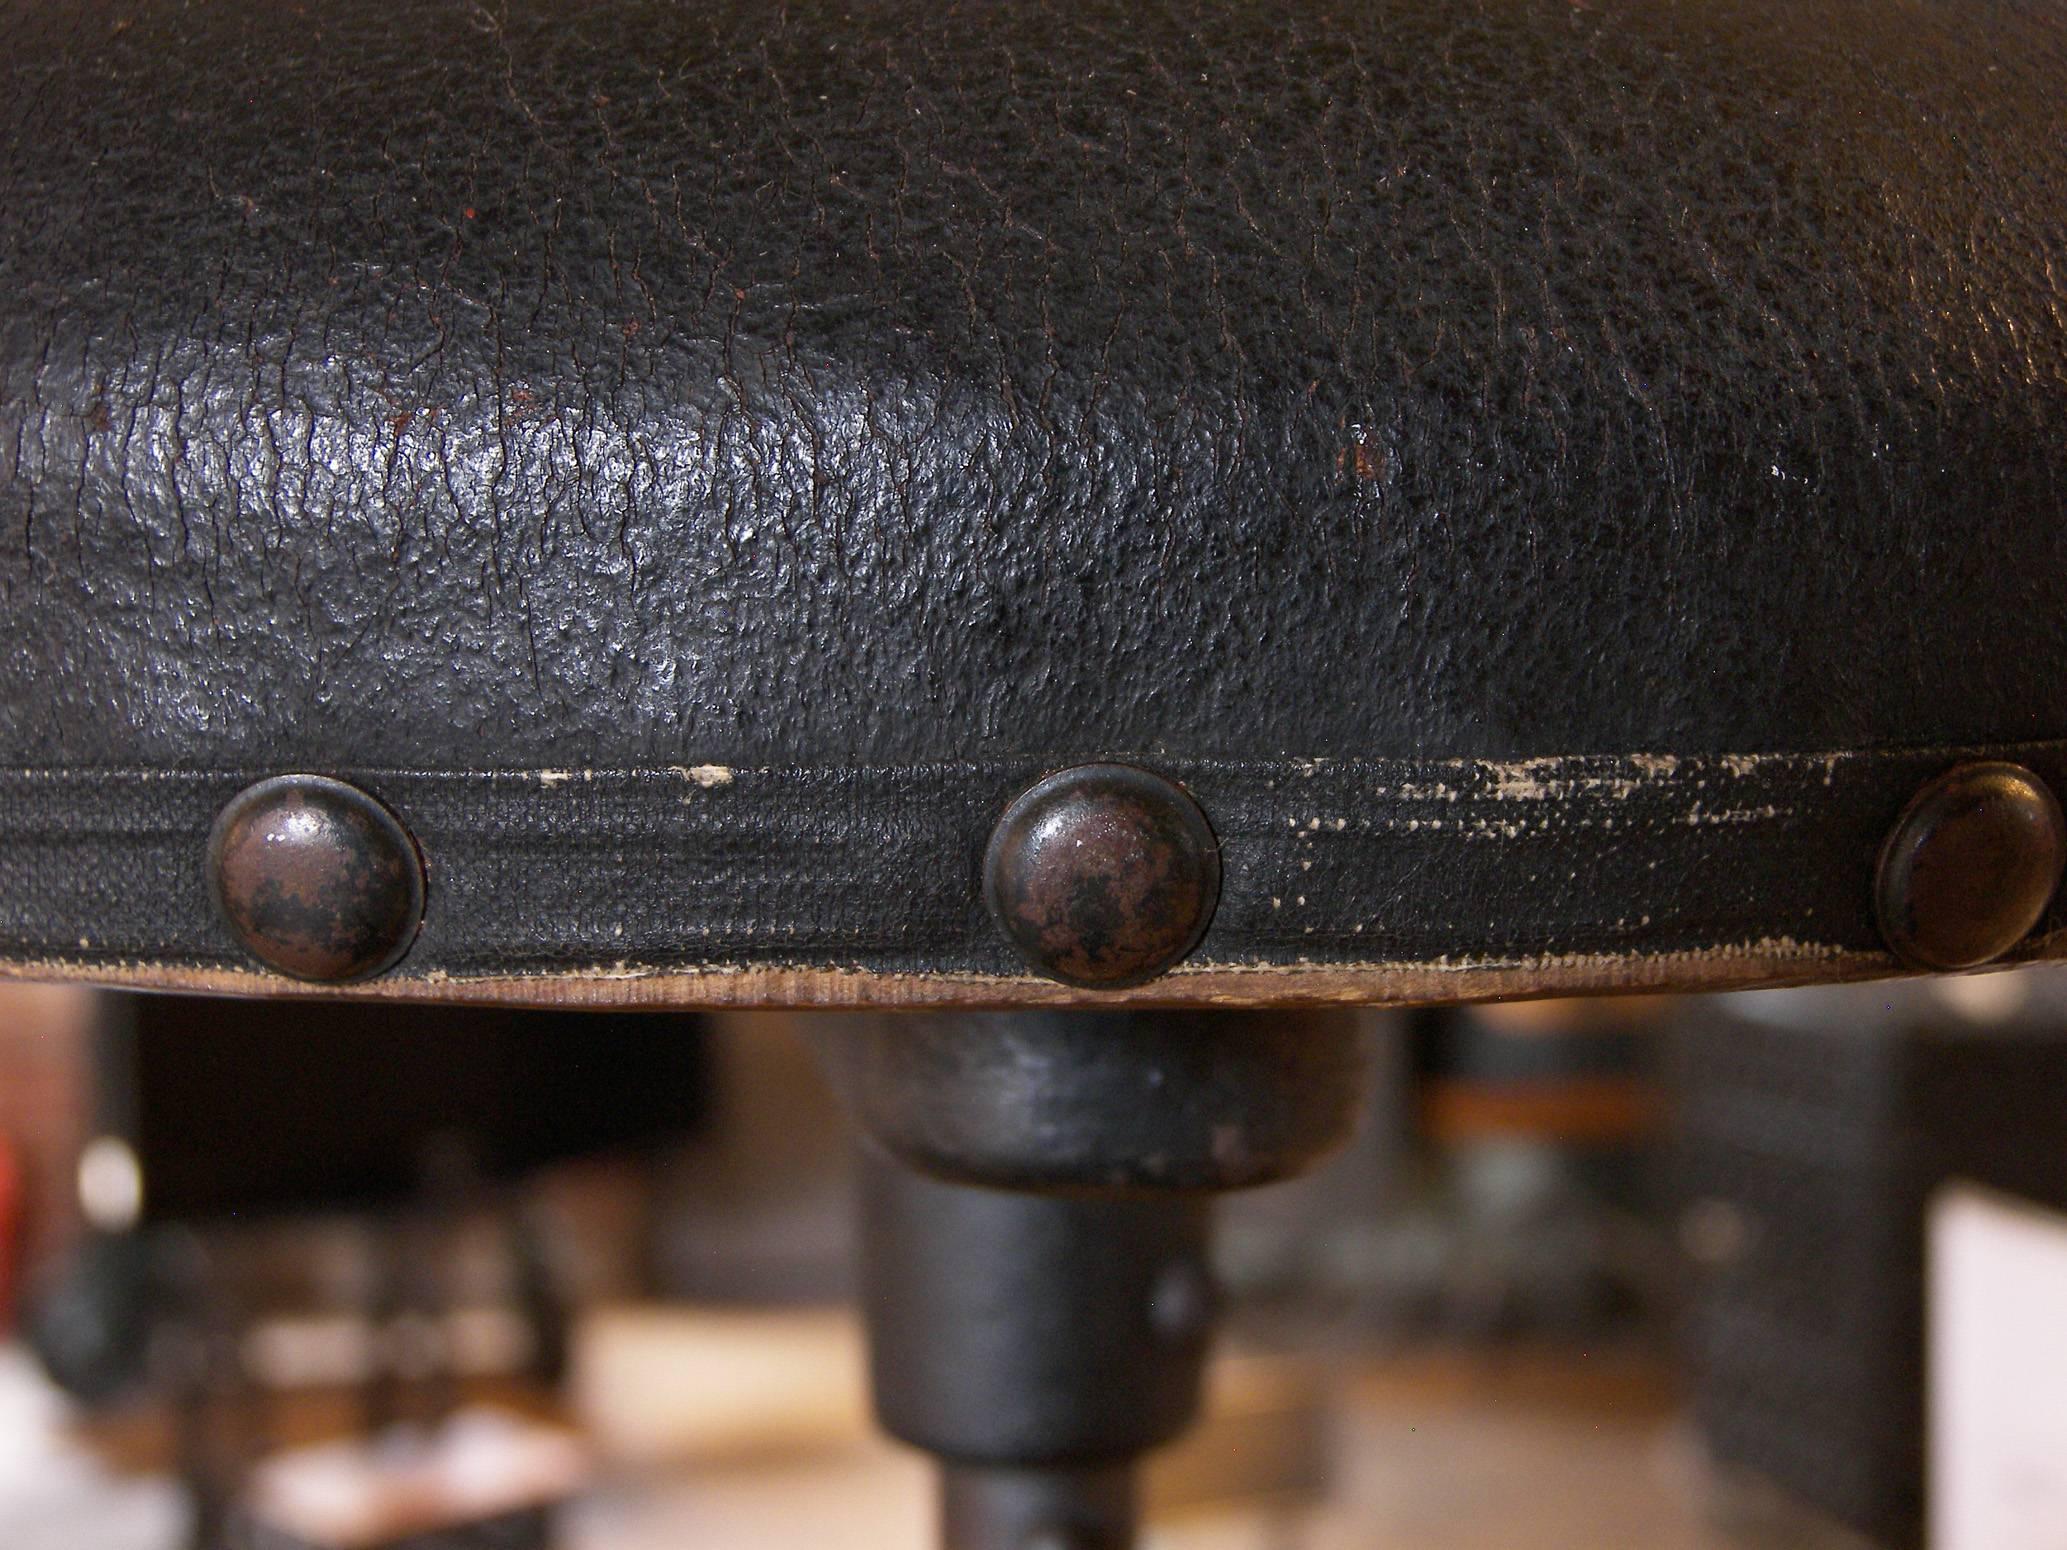 North American Vintage Industrial Retro Aluminum, Cast Iron and Leather Adjustable Stool